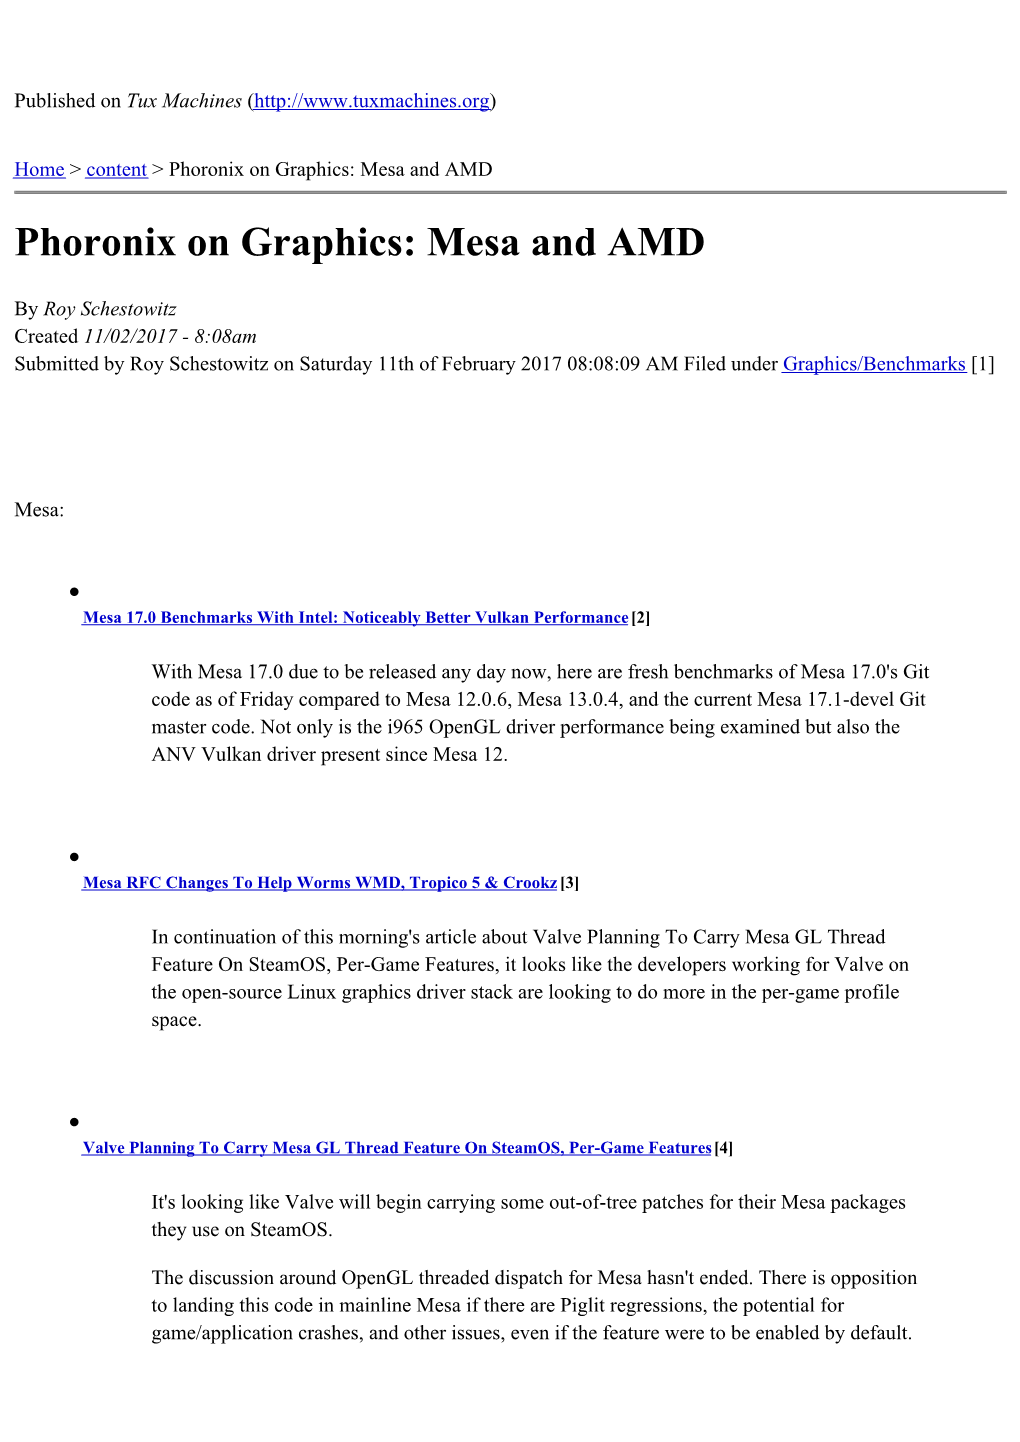 Phoronix on Graphics: Mesa and AMD